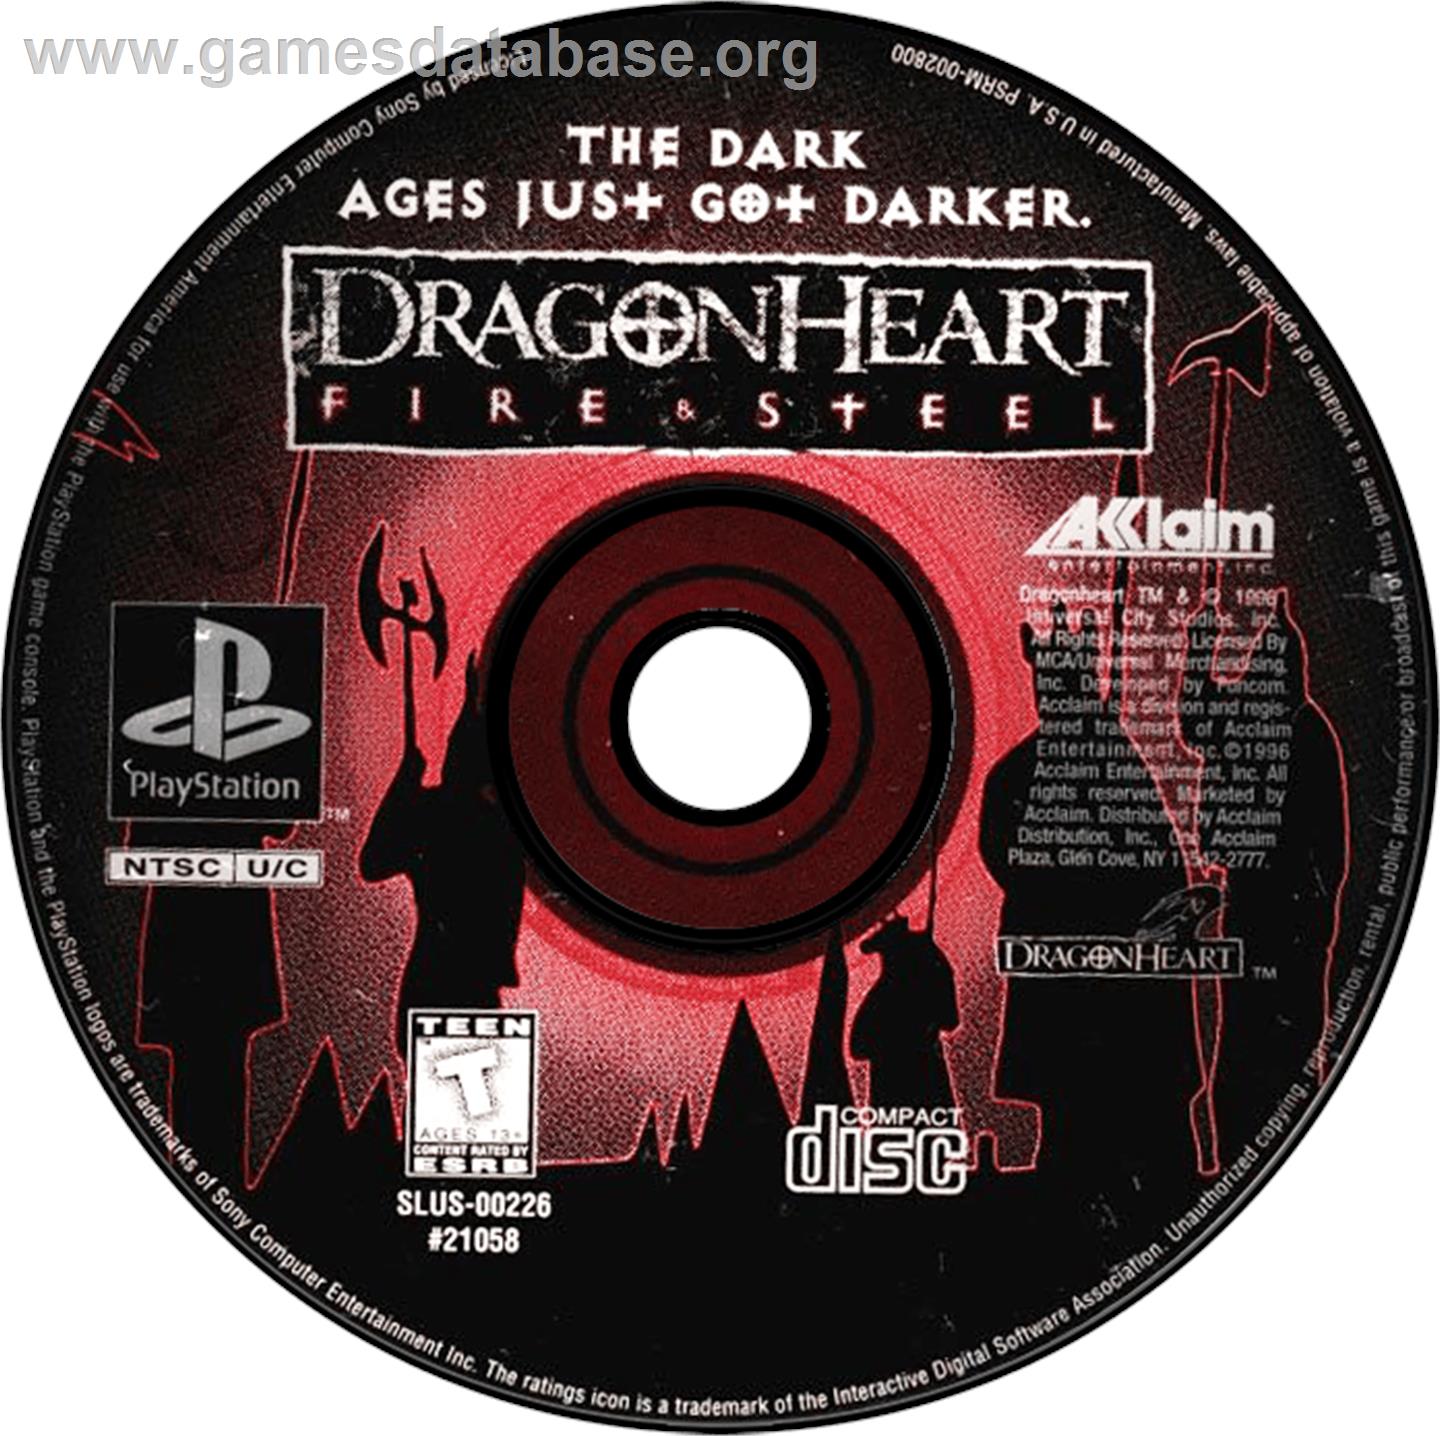 DragonHeart: Fire & Steel - Sony Playstation - Artwork - Disc